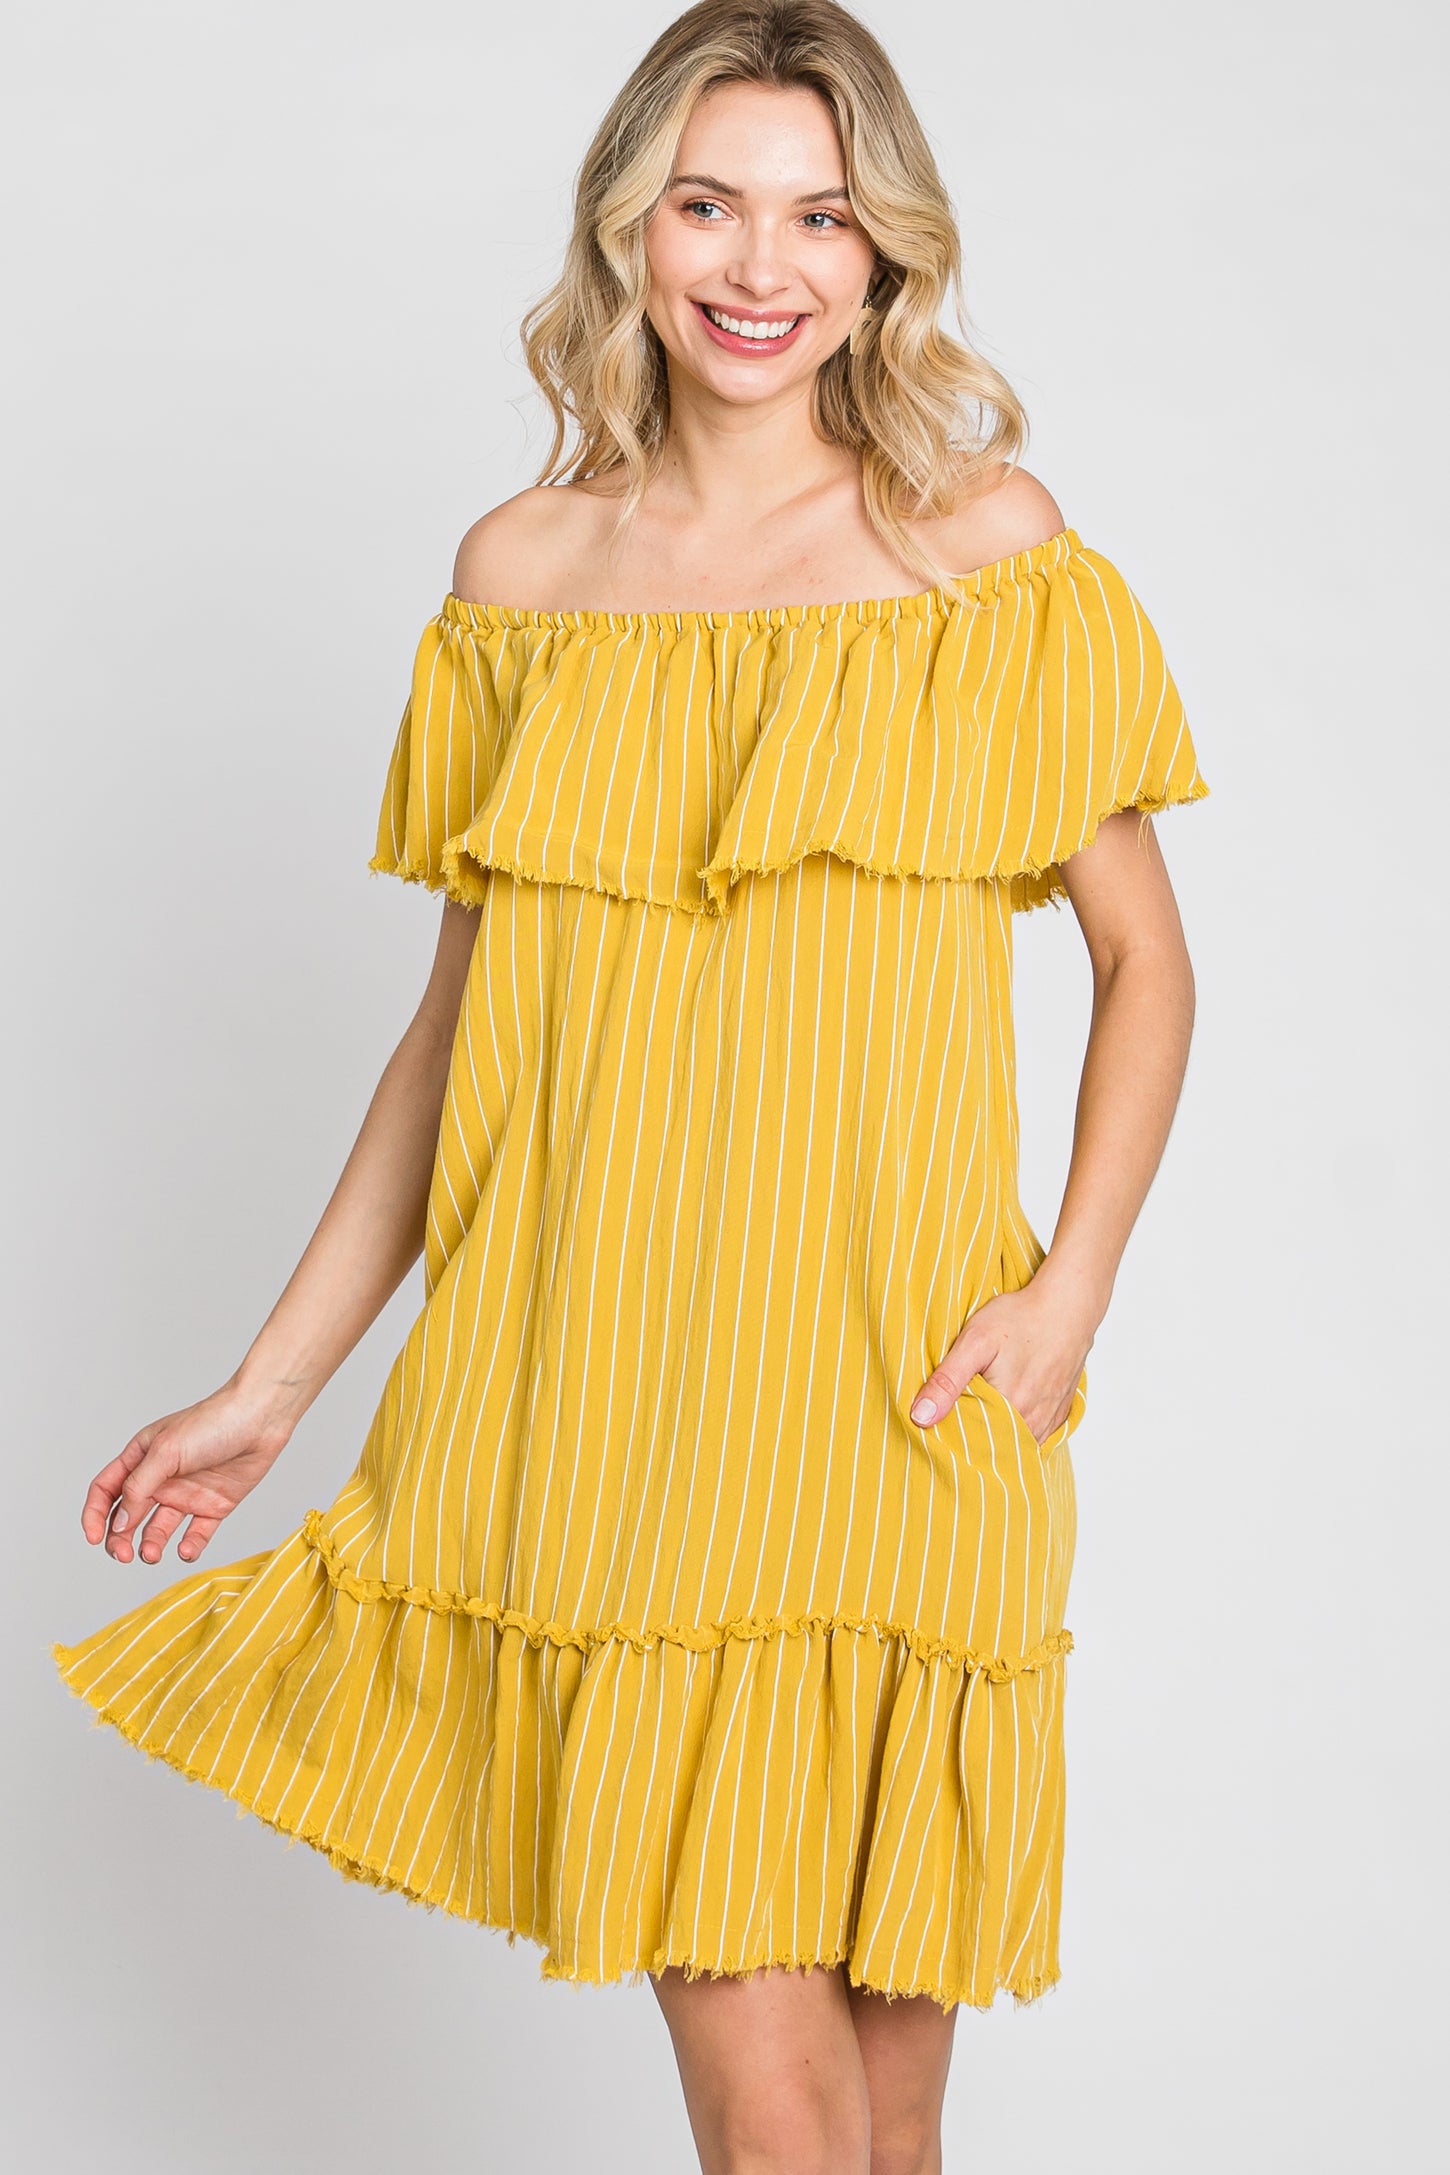 Mustard Striped Off Shoulder Frayed Maternity Dress